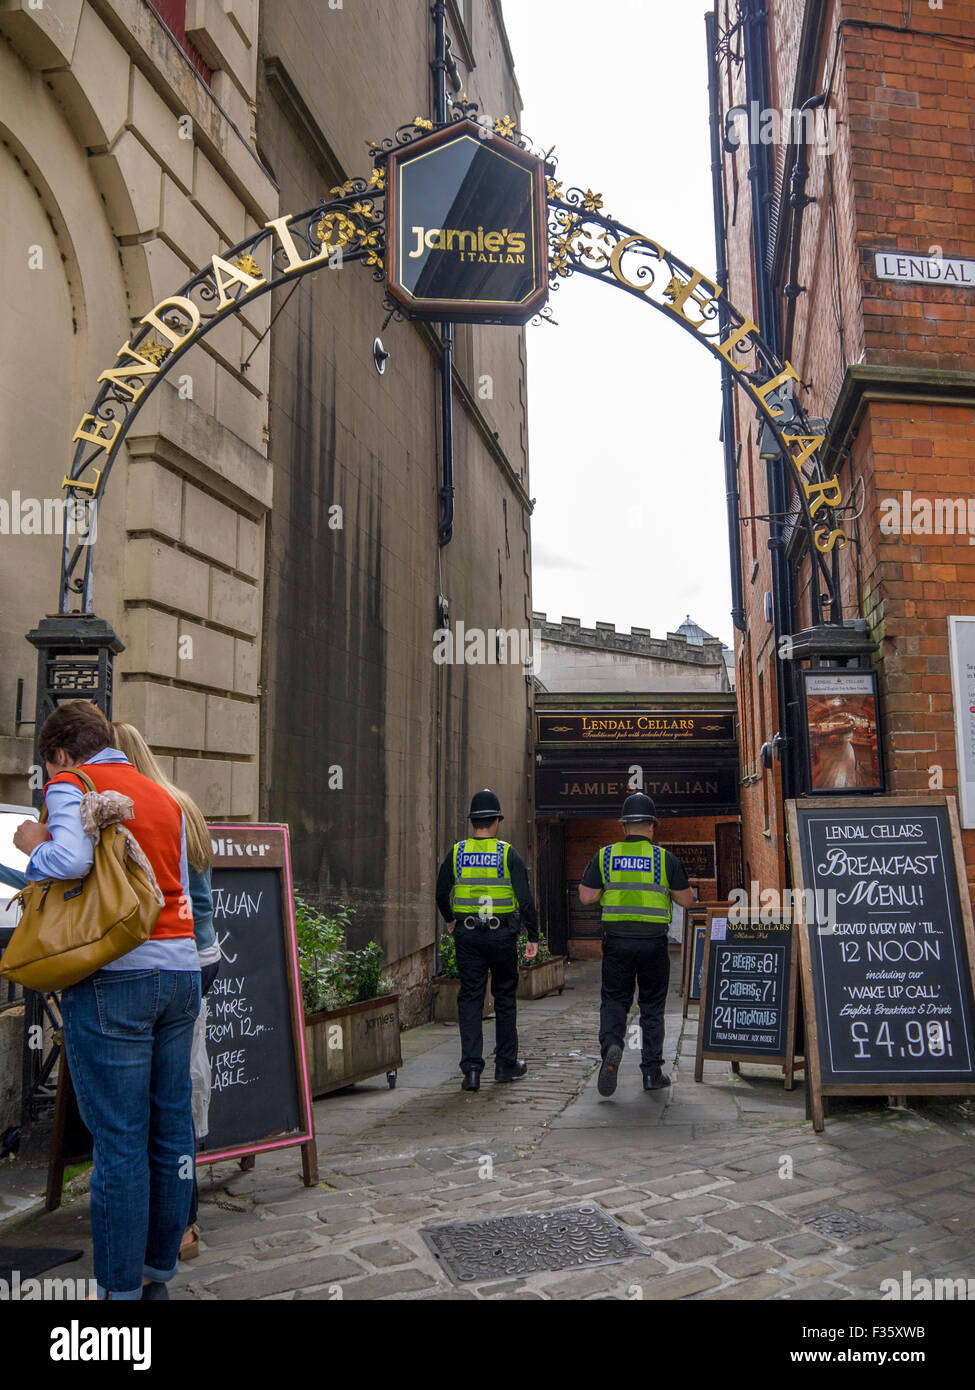 Police going into Jamies Italian restaurant in York Stock Photo